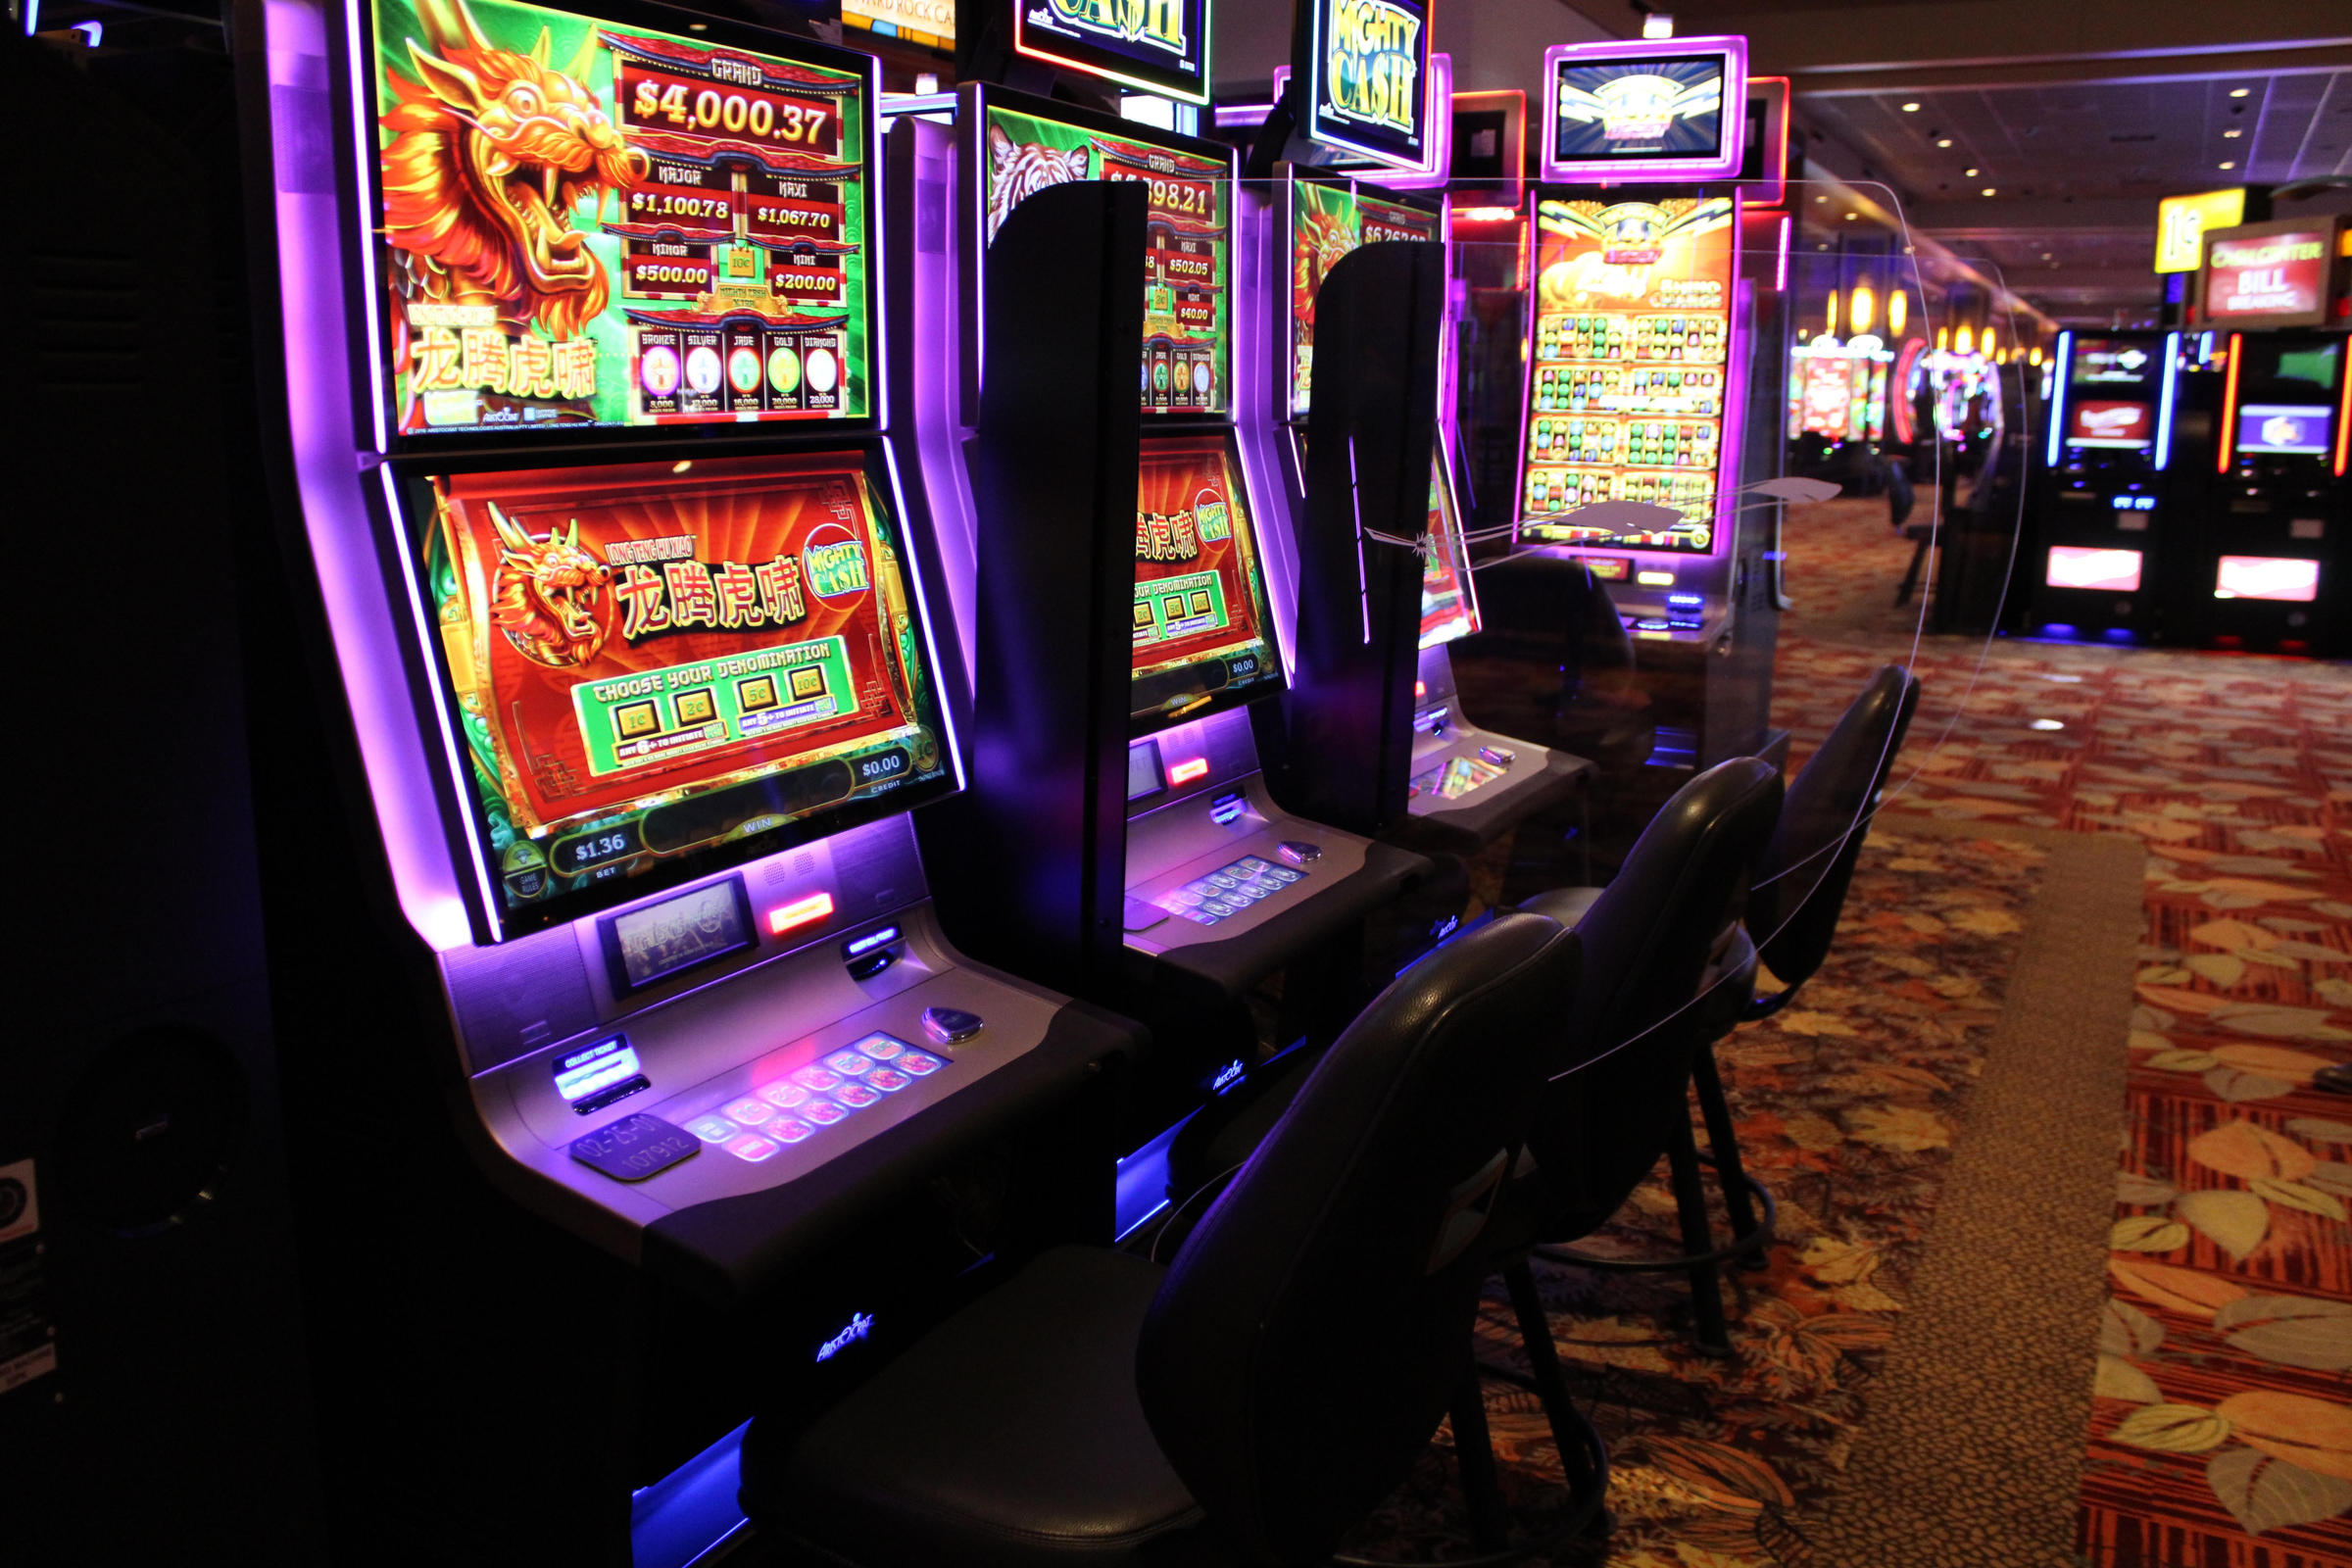 four winds casinos in michigan